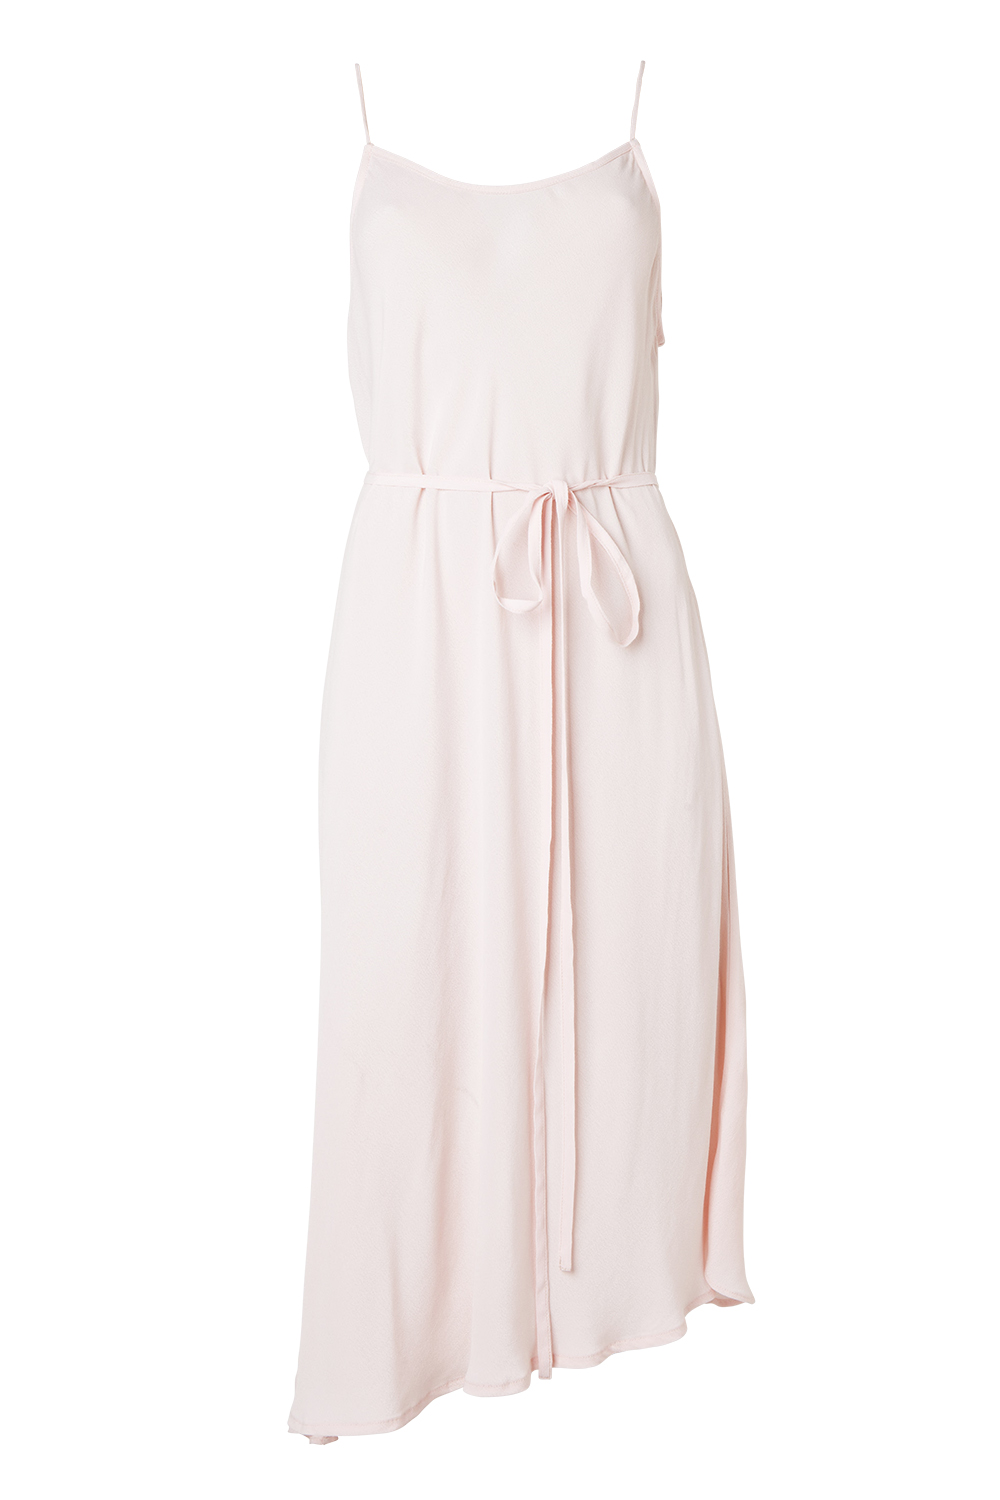 Dress, $253, by Charmaine Reveley.